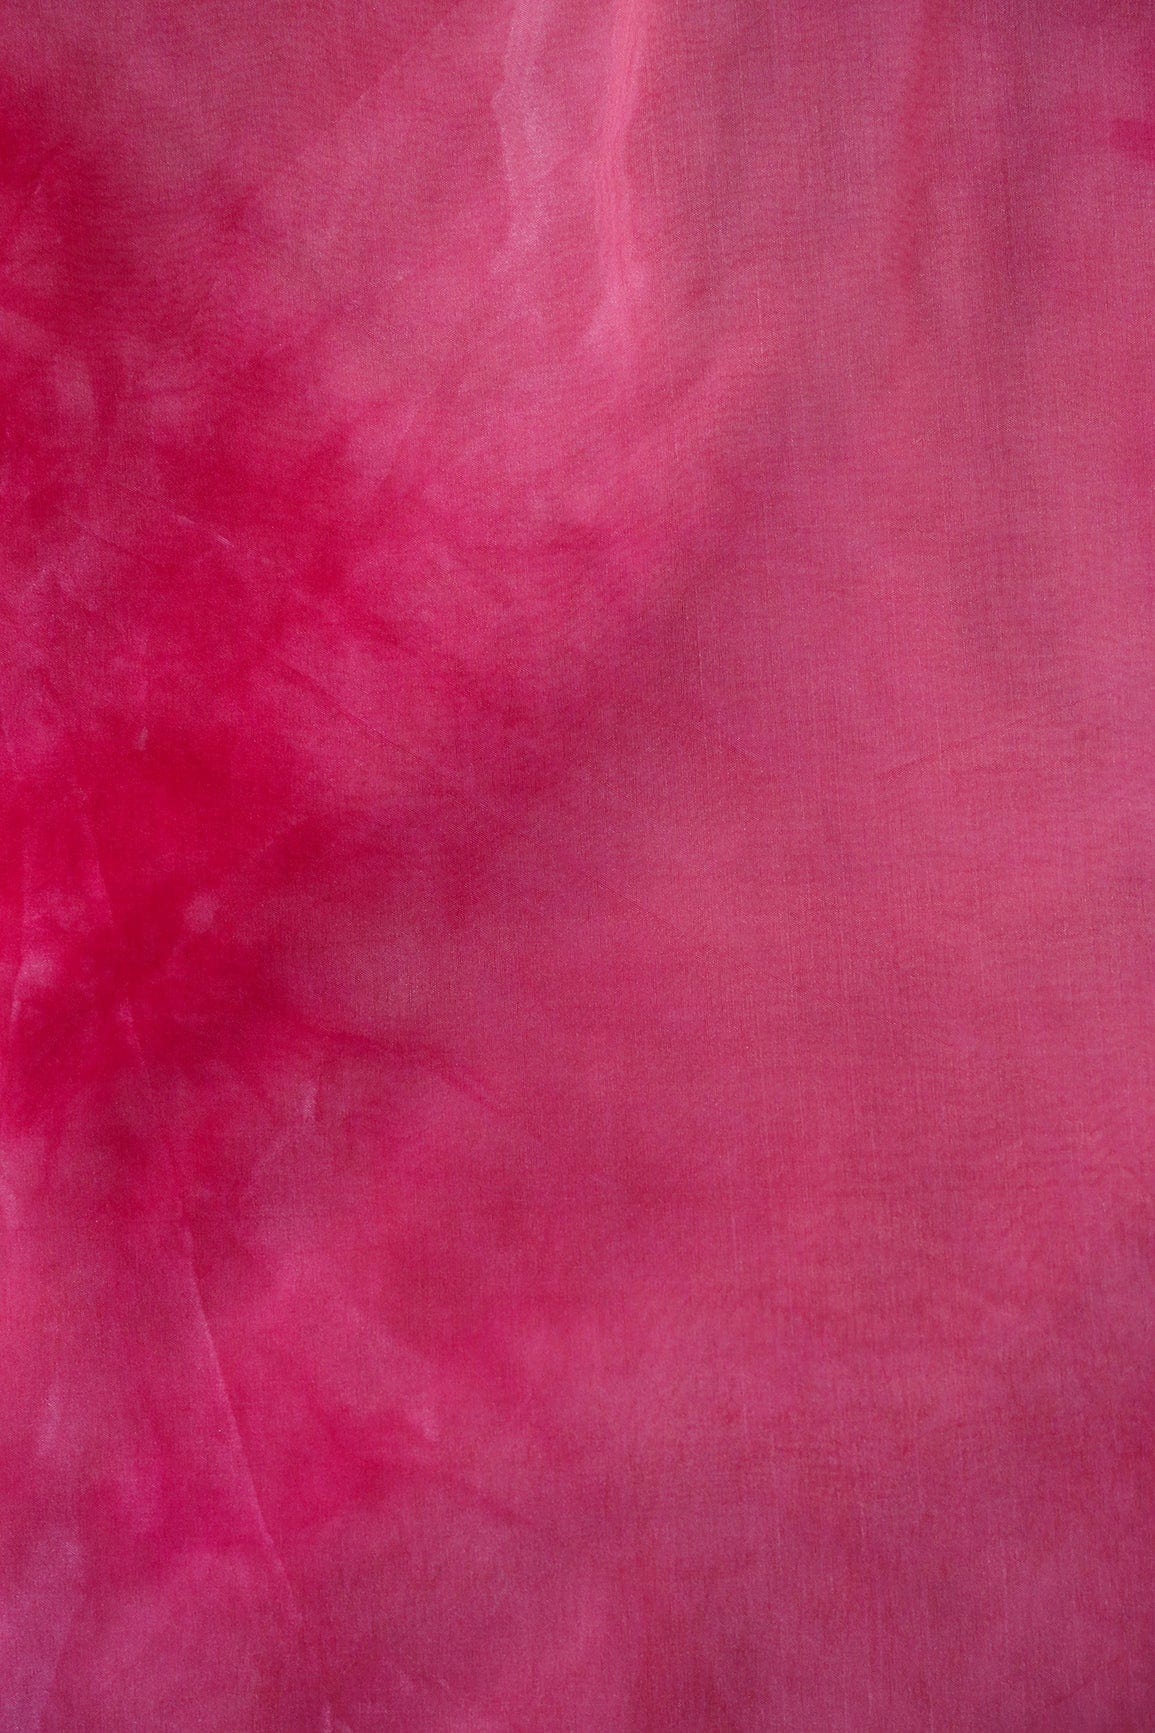 doeraa Prints Pink Tie & Dye Shibori Print On Organza Fabric